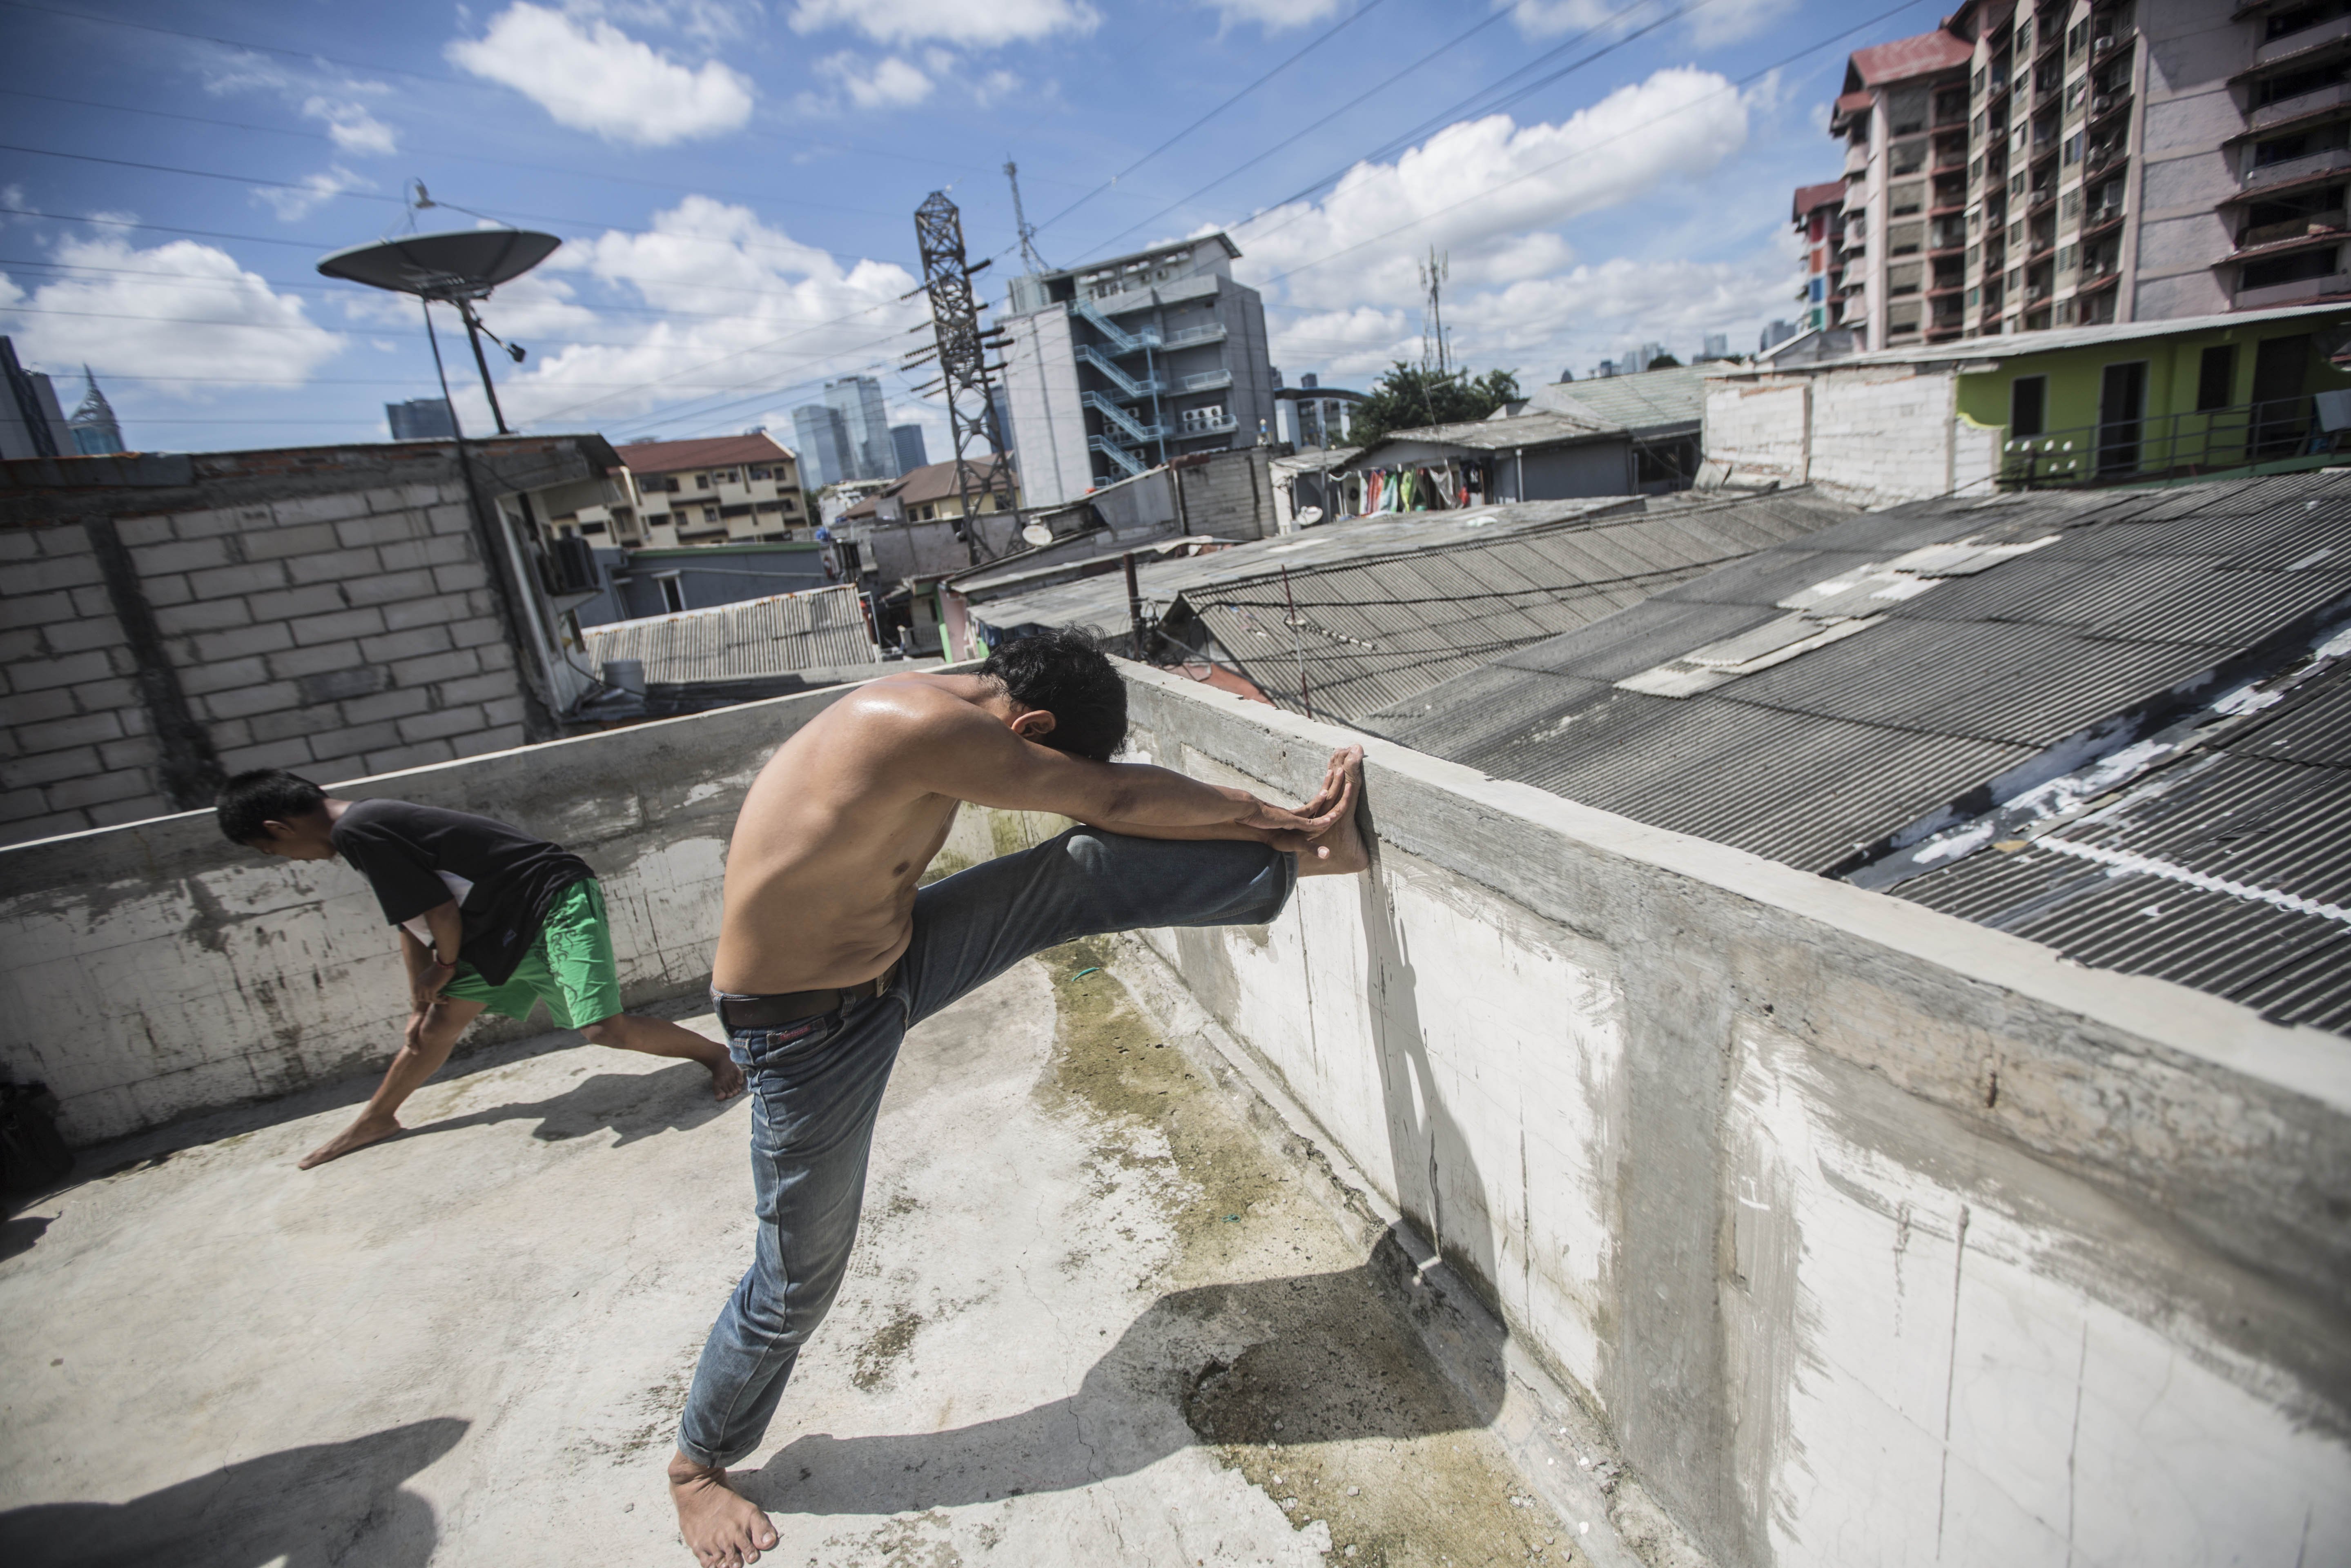 Sejumlah warga berjemur di balkon kawasan pemukiman Penjompongan, Jakarta Pusat, Selasa (7/4/2020). Berjemur diri di bawah sinar matahari di antara pukul 08.00 WIB-11.00 WIB dipercaya warga salah satu upaya yang paling sederhana untuk menjaga kesehatan selama wabah virus corona.